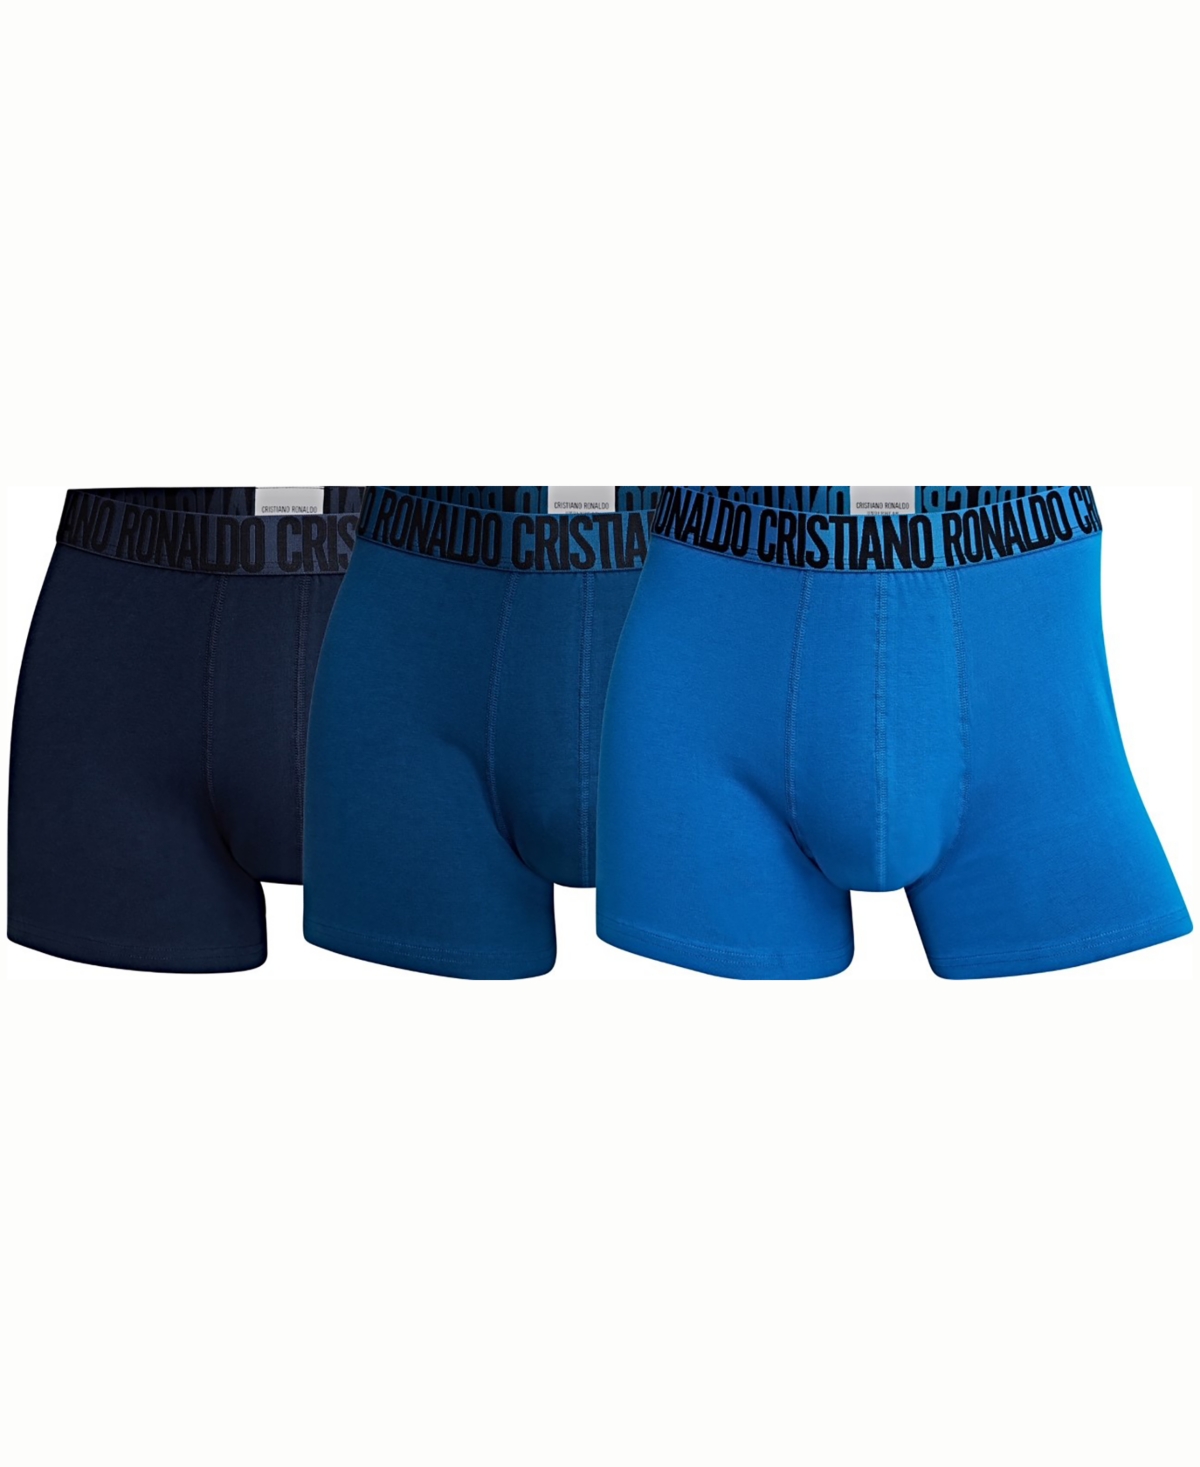 Men's Cotton Blend Trunks, Pack of 3 - Blue